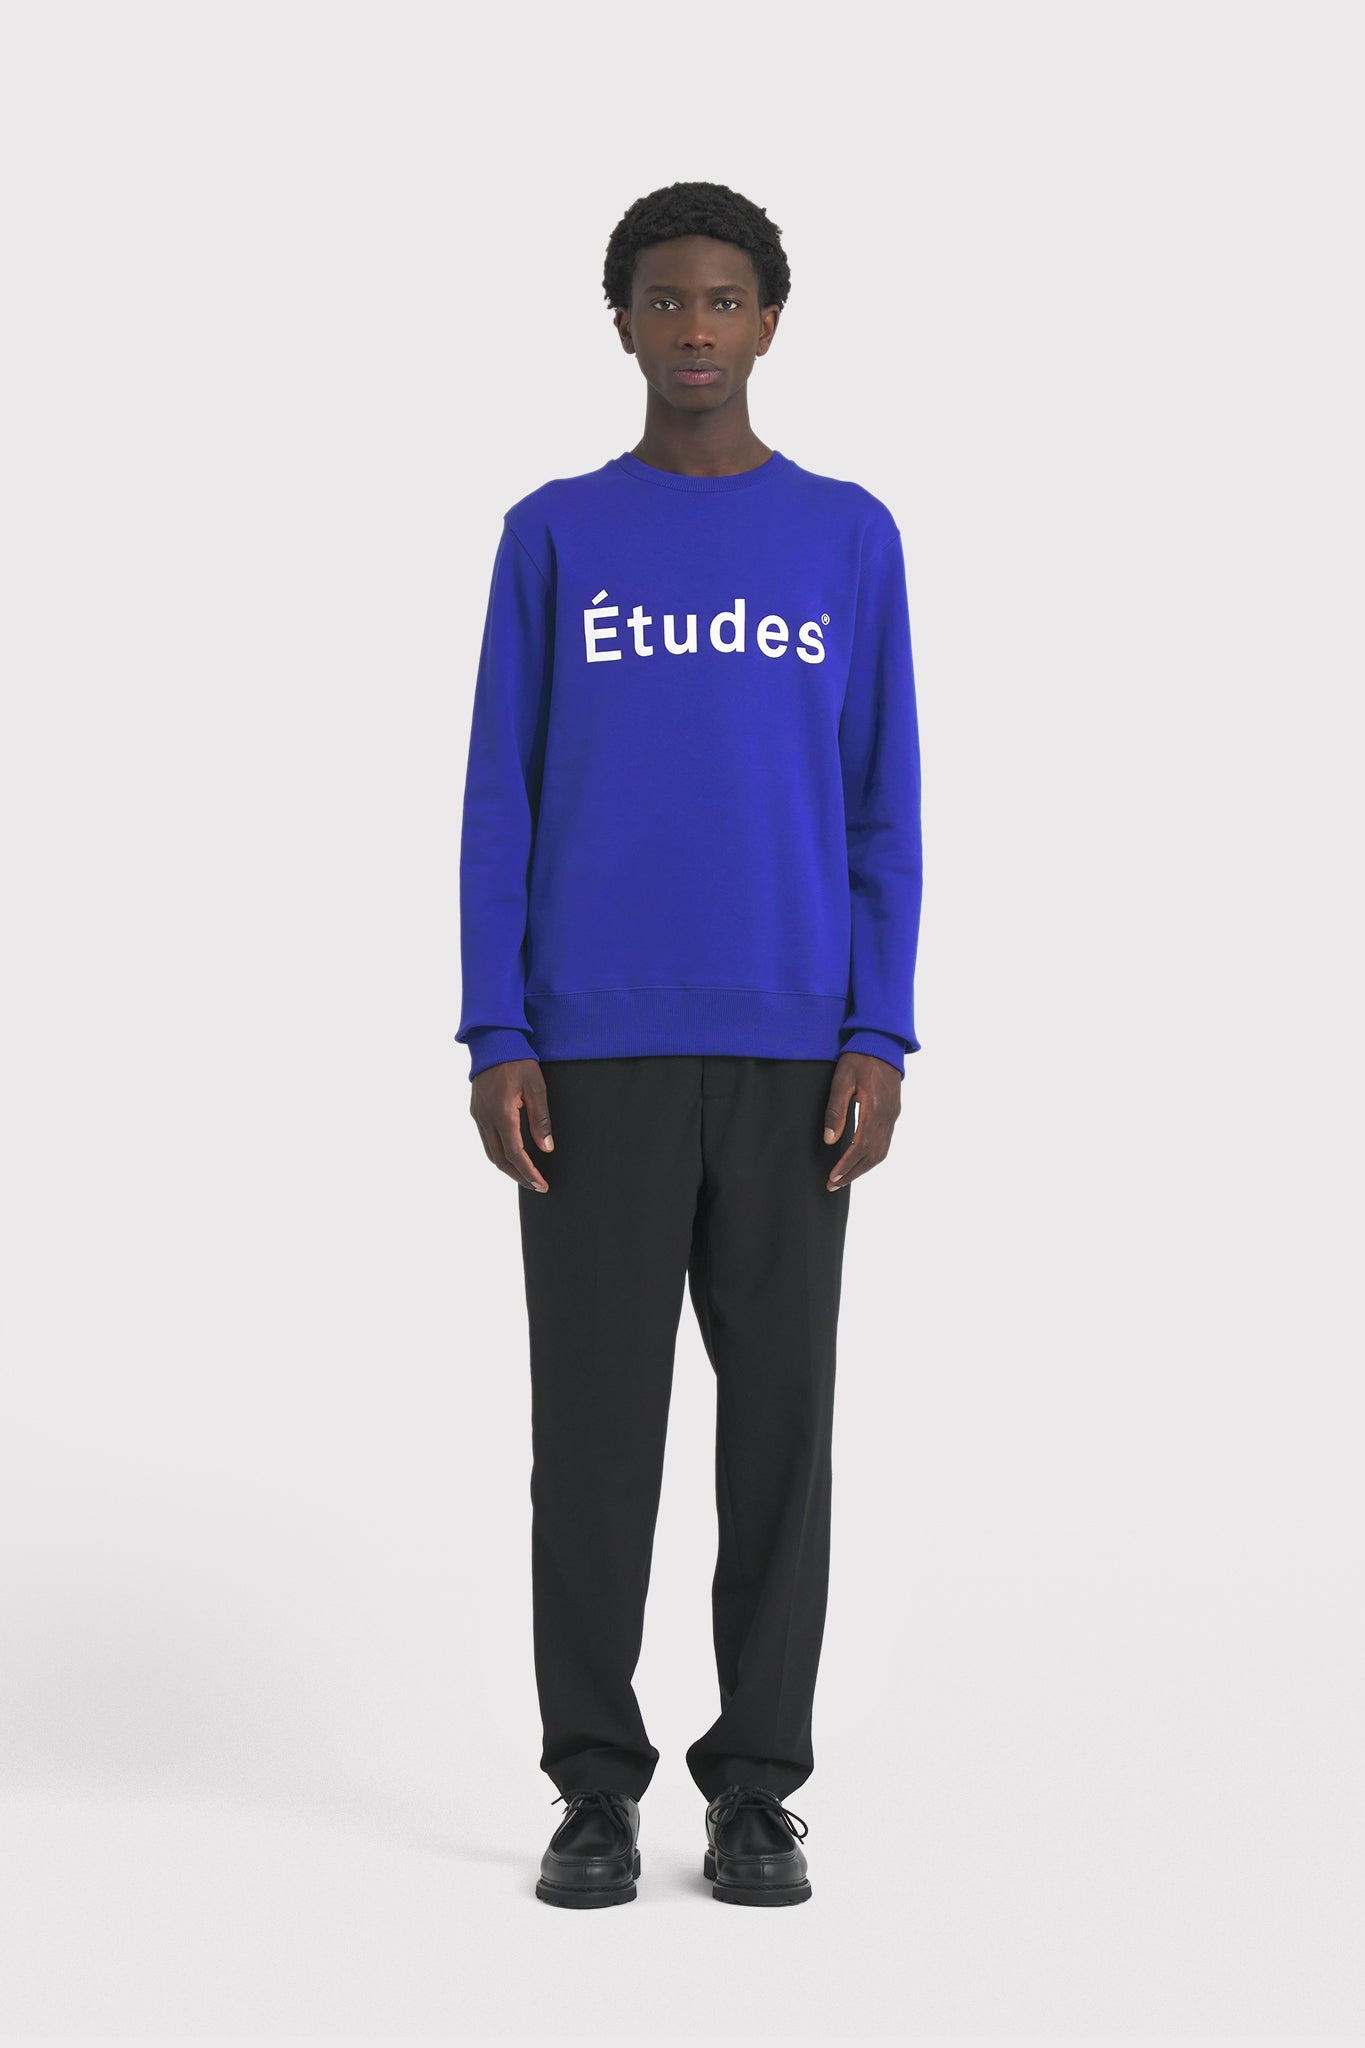 Etudes - スウェットシャツ